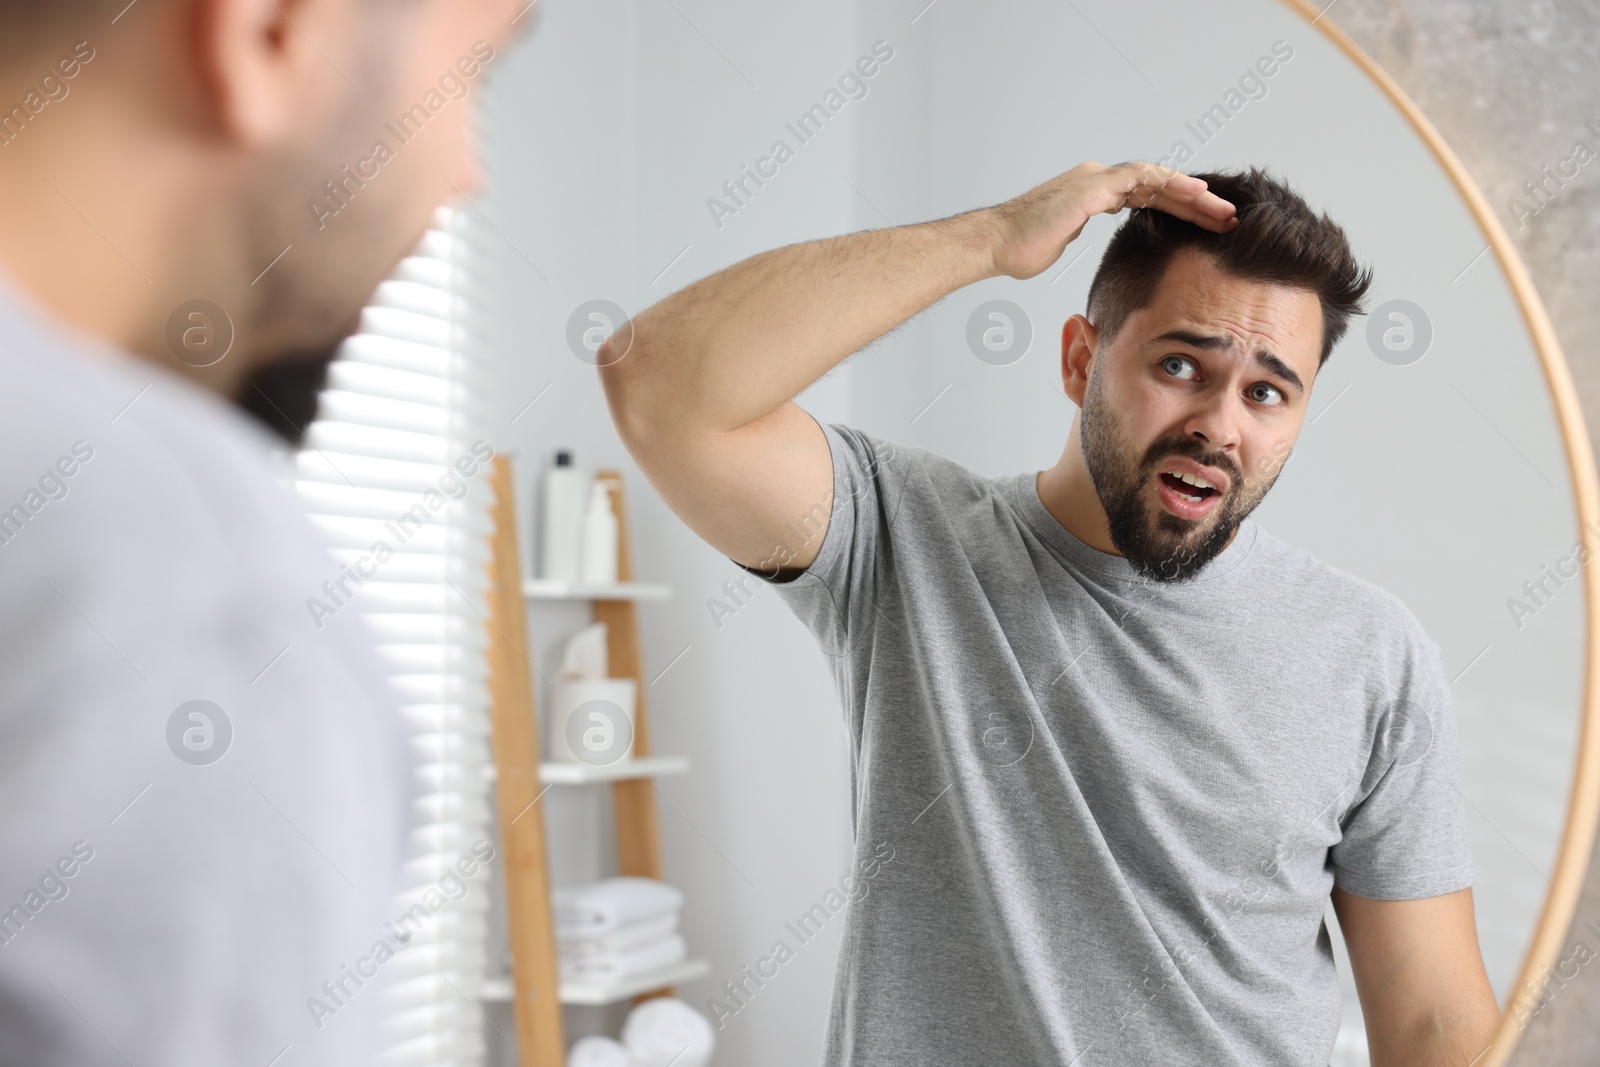 Photo of Emotional man examining his head near mirror in bathroom. Dandruff problem